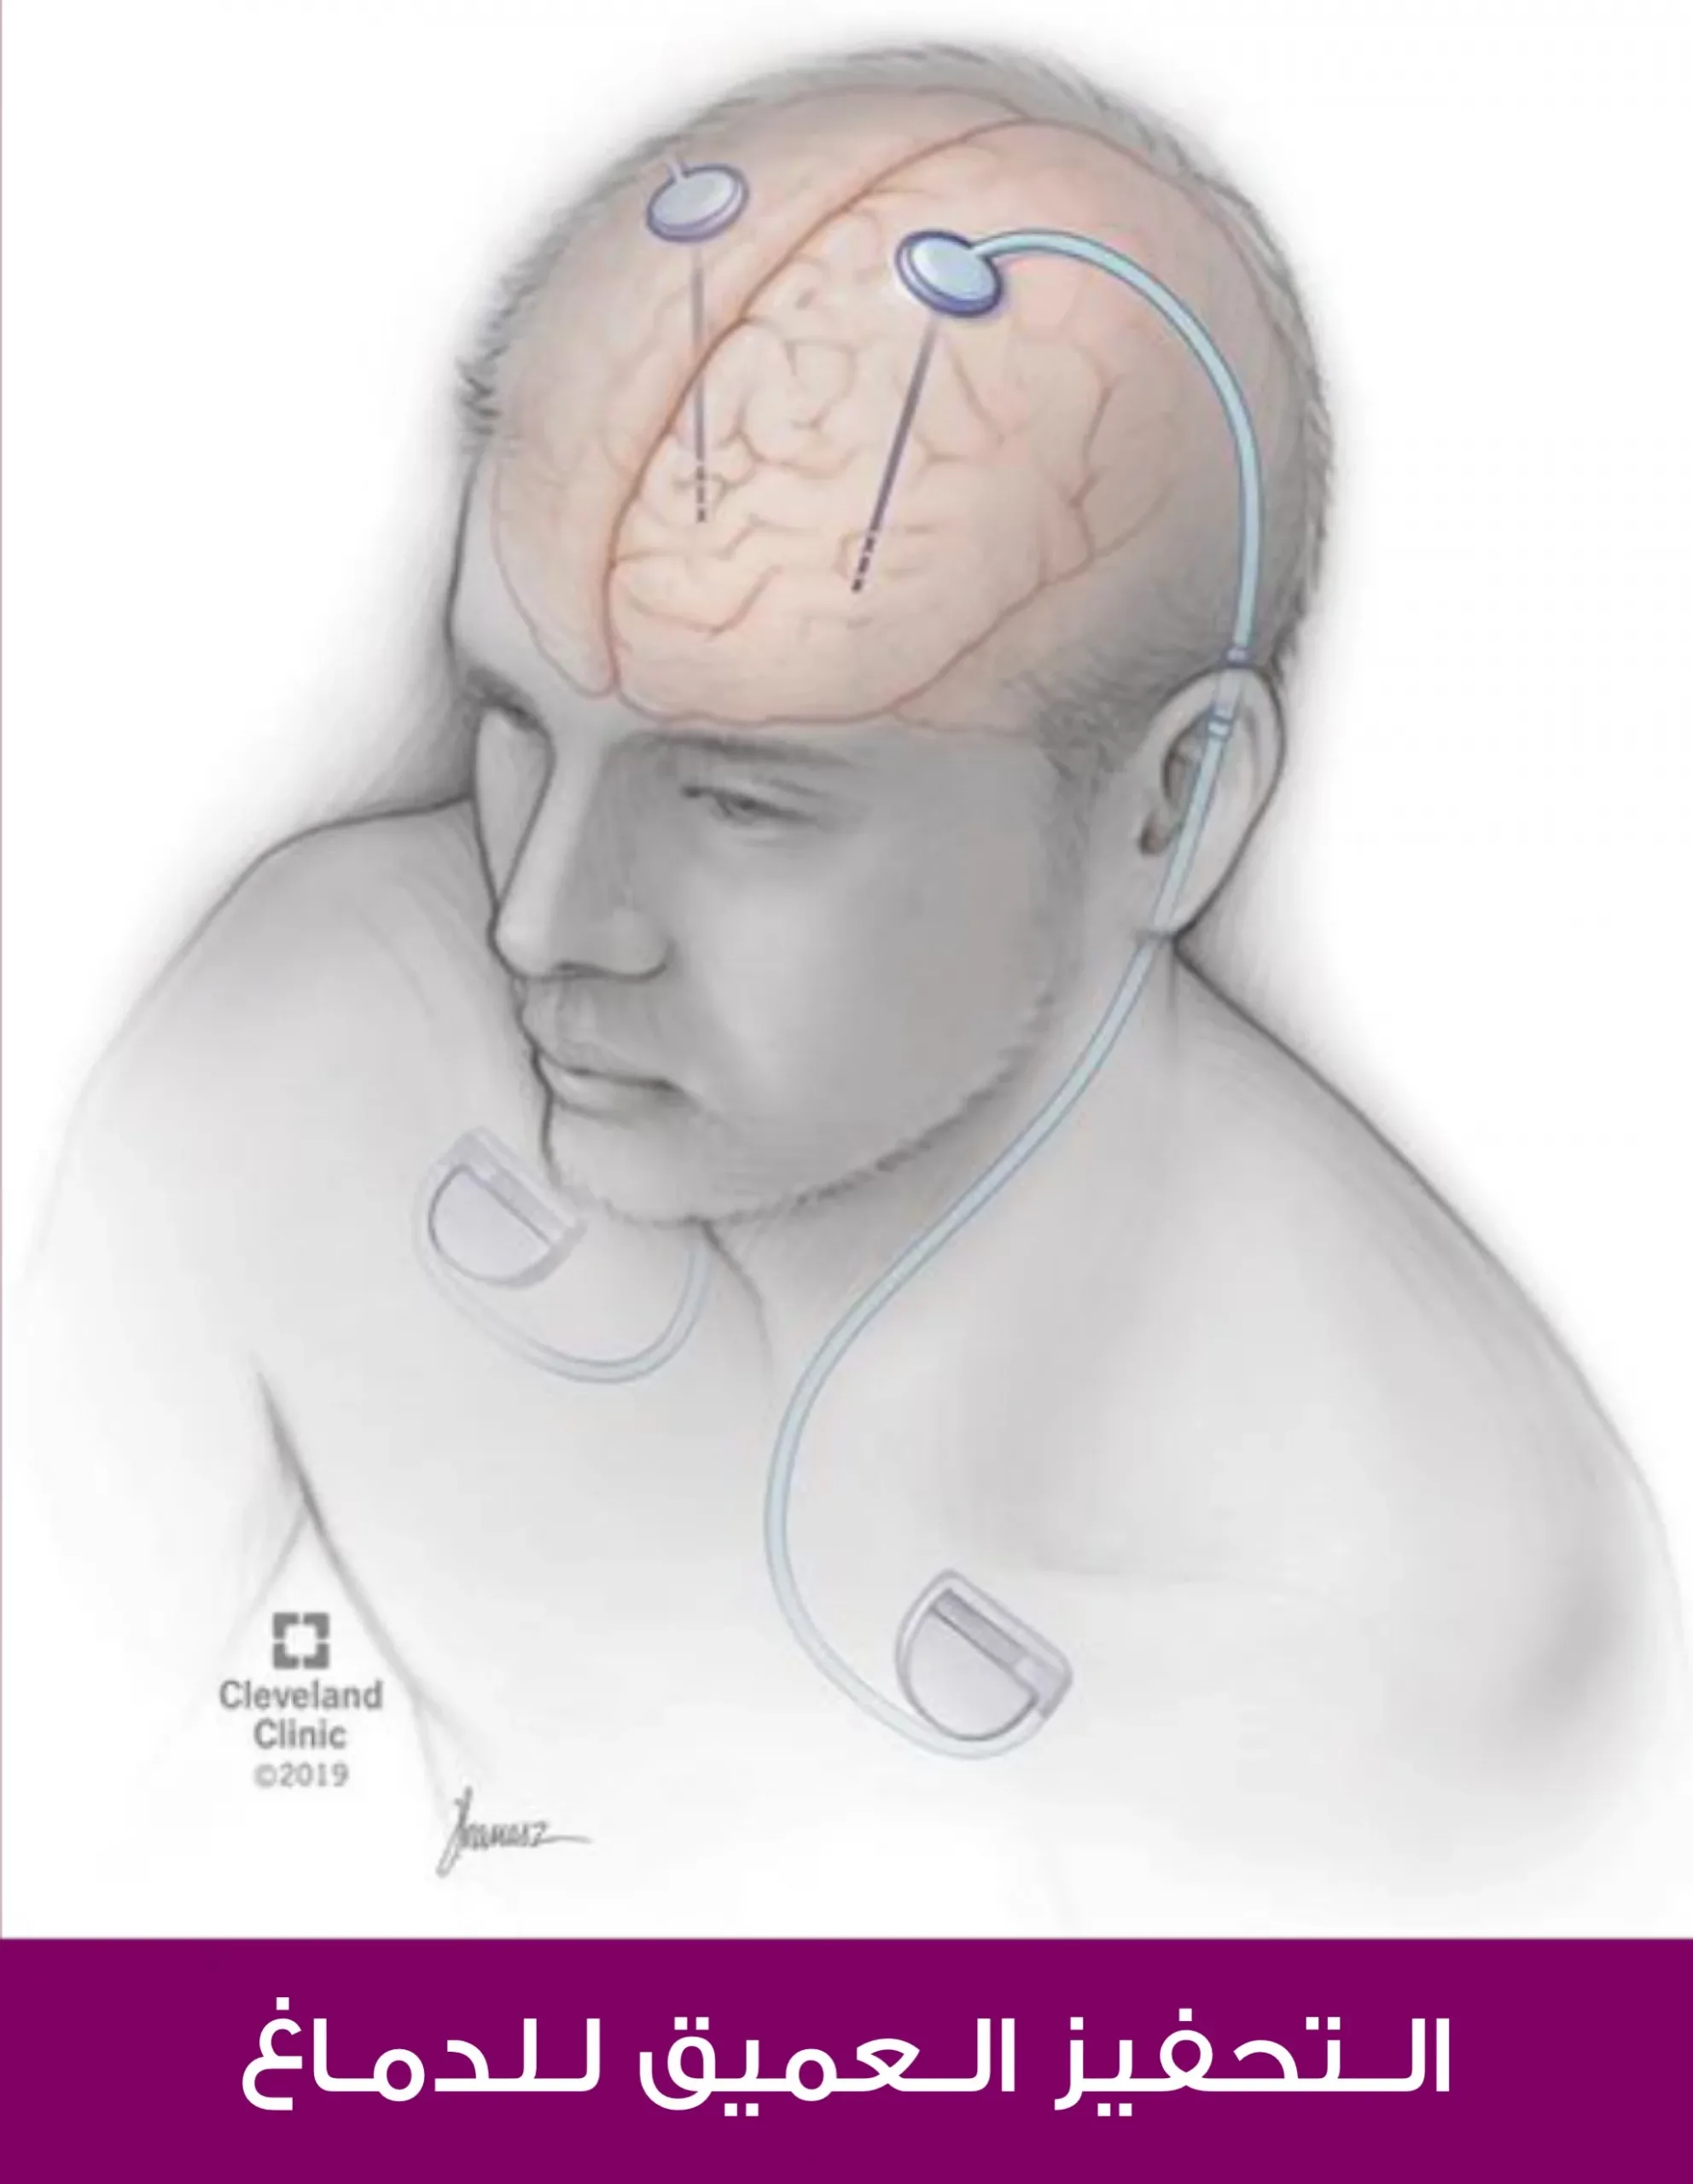 Deep brain stimulation, which is used to treat epilepsy in Turkey